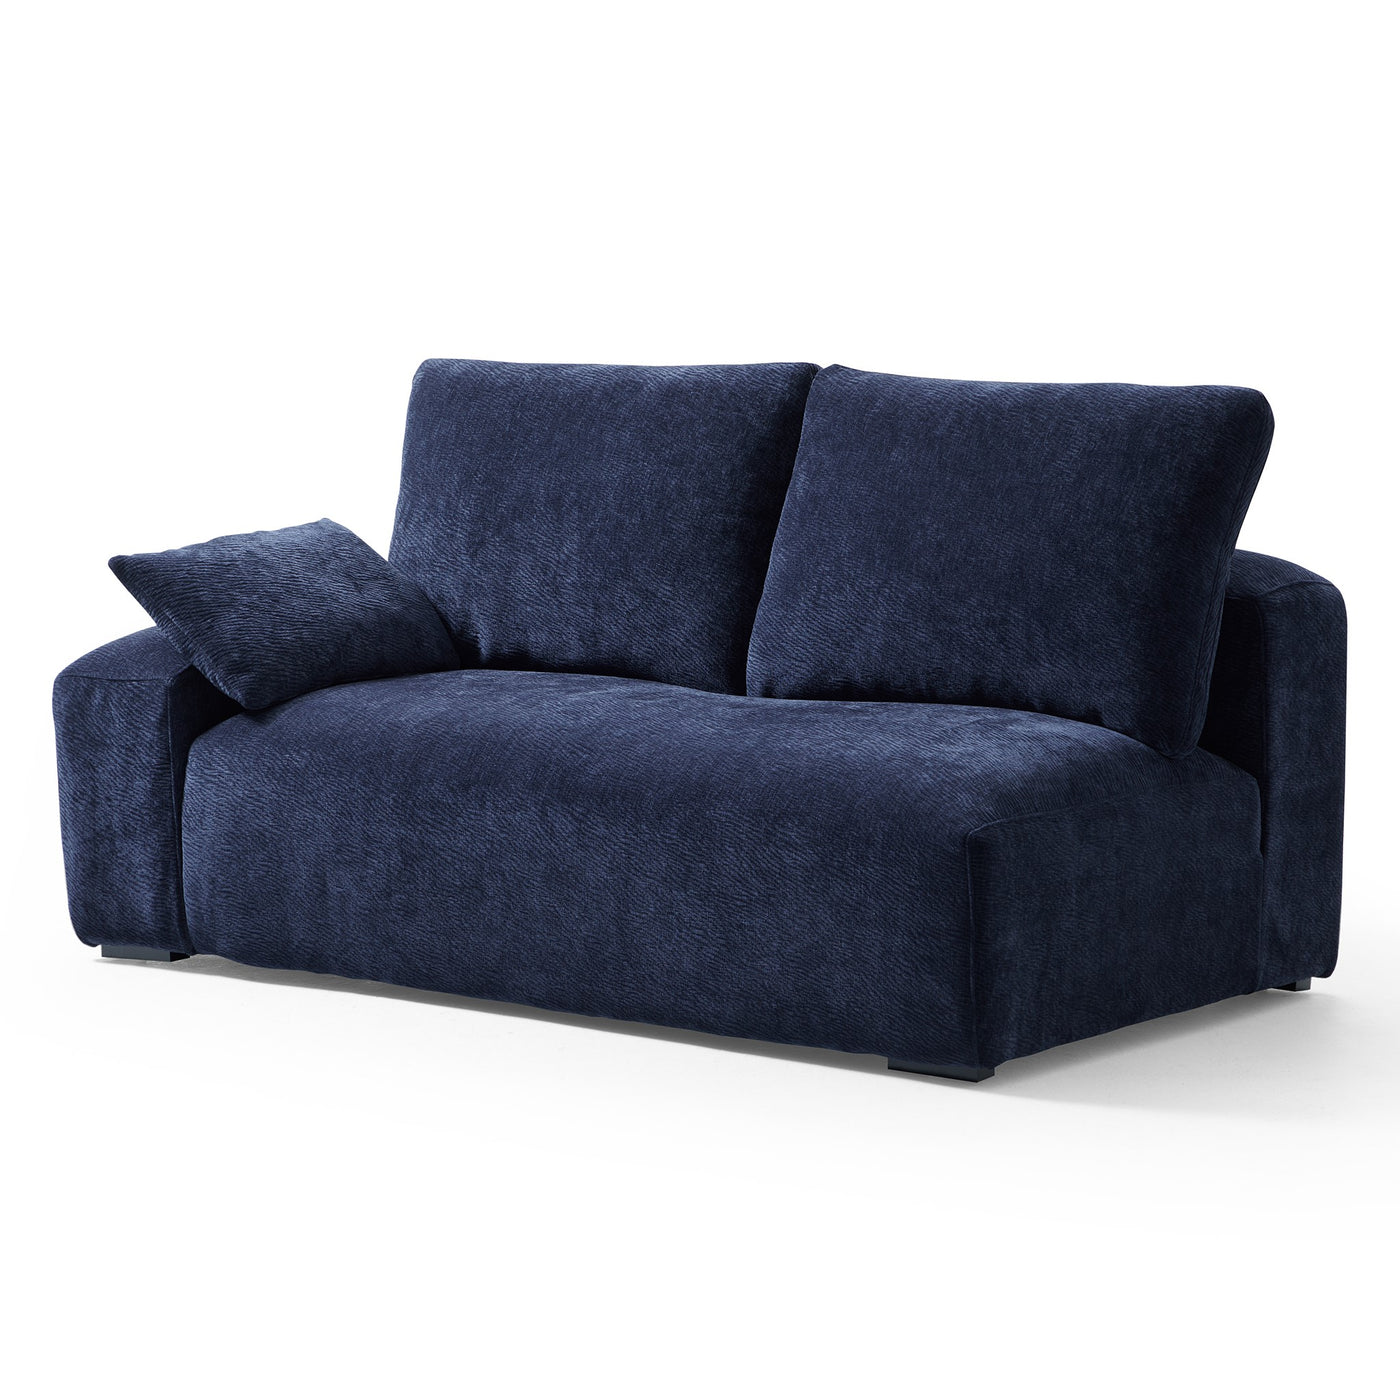 The Empress Navy Blue Sofa-Navy Blue